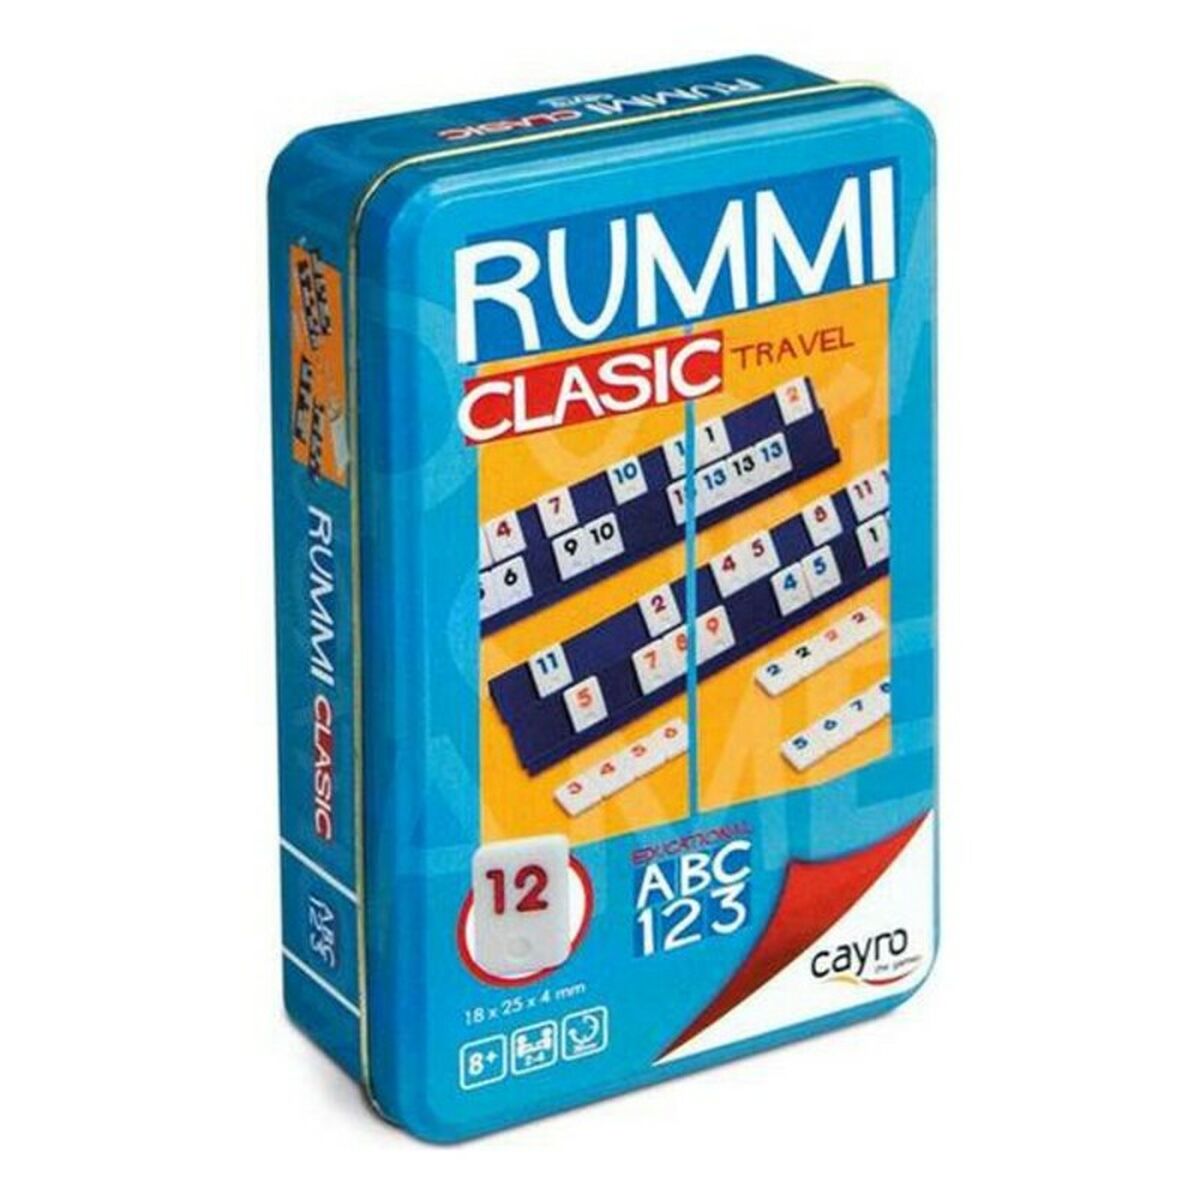 Board game Rummi Classic Travel Cayro 150-755 11,5 x 19,5 cm - Little Baby Shop